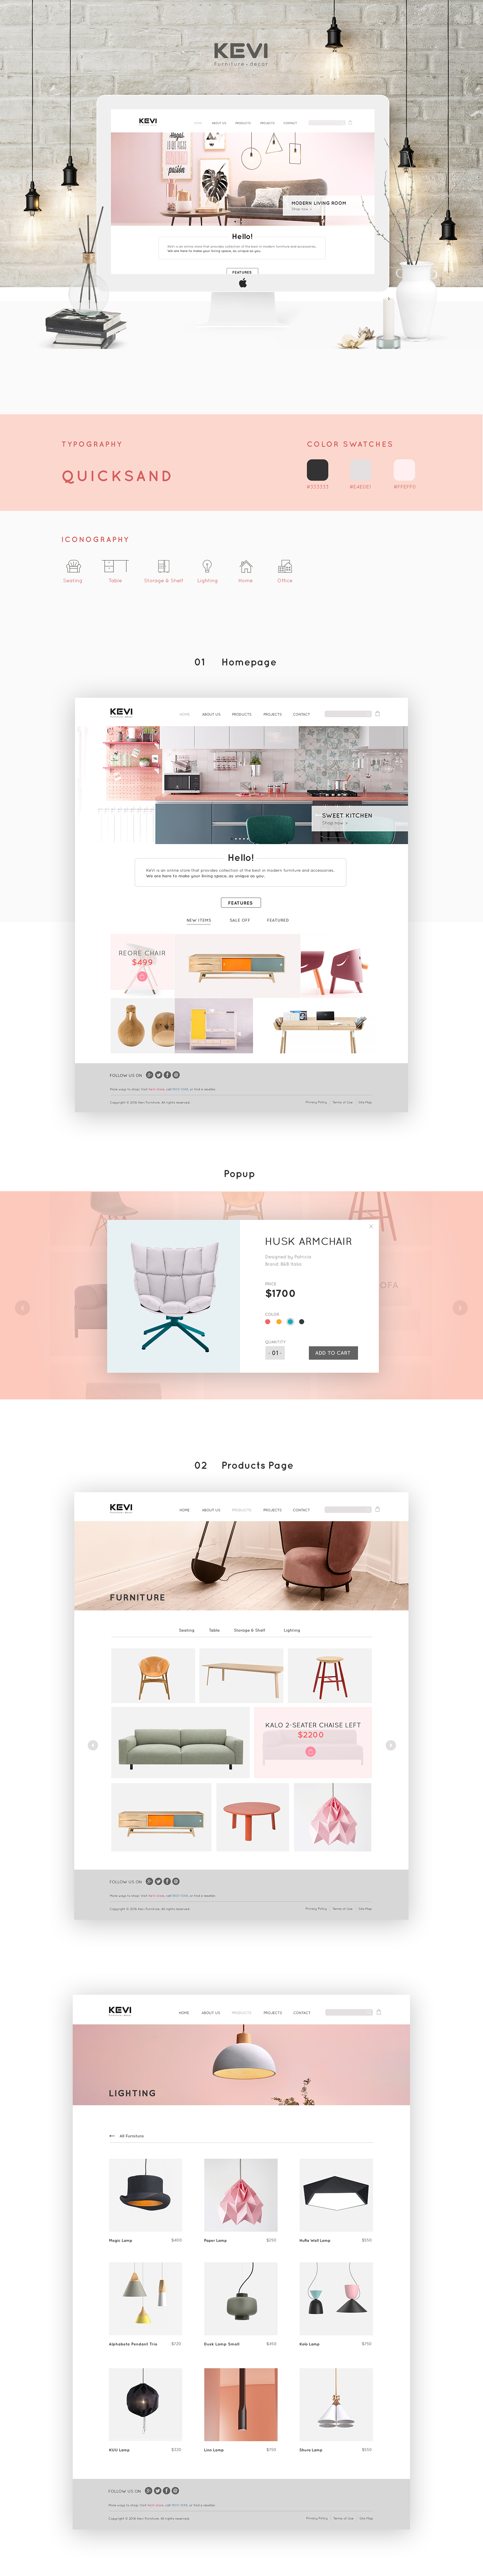 Website furniture e-commerce interior design 